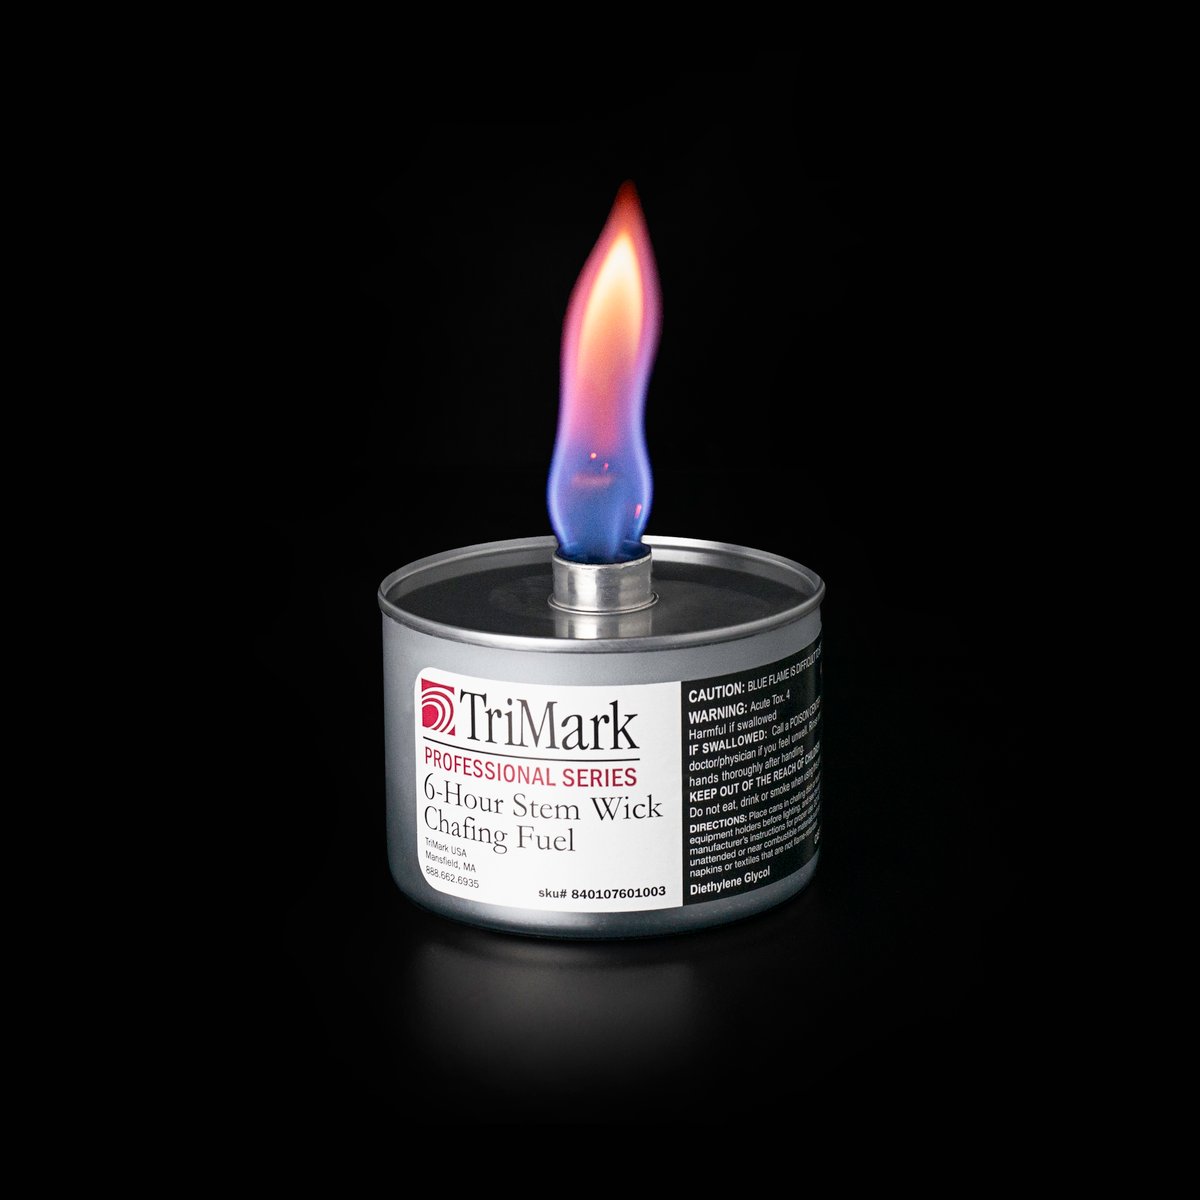 TriMark Professional Chafing Fuel,  Liquid Wick  Burn Time: 6 hour  SKU: 840107601003